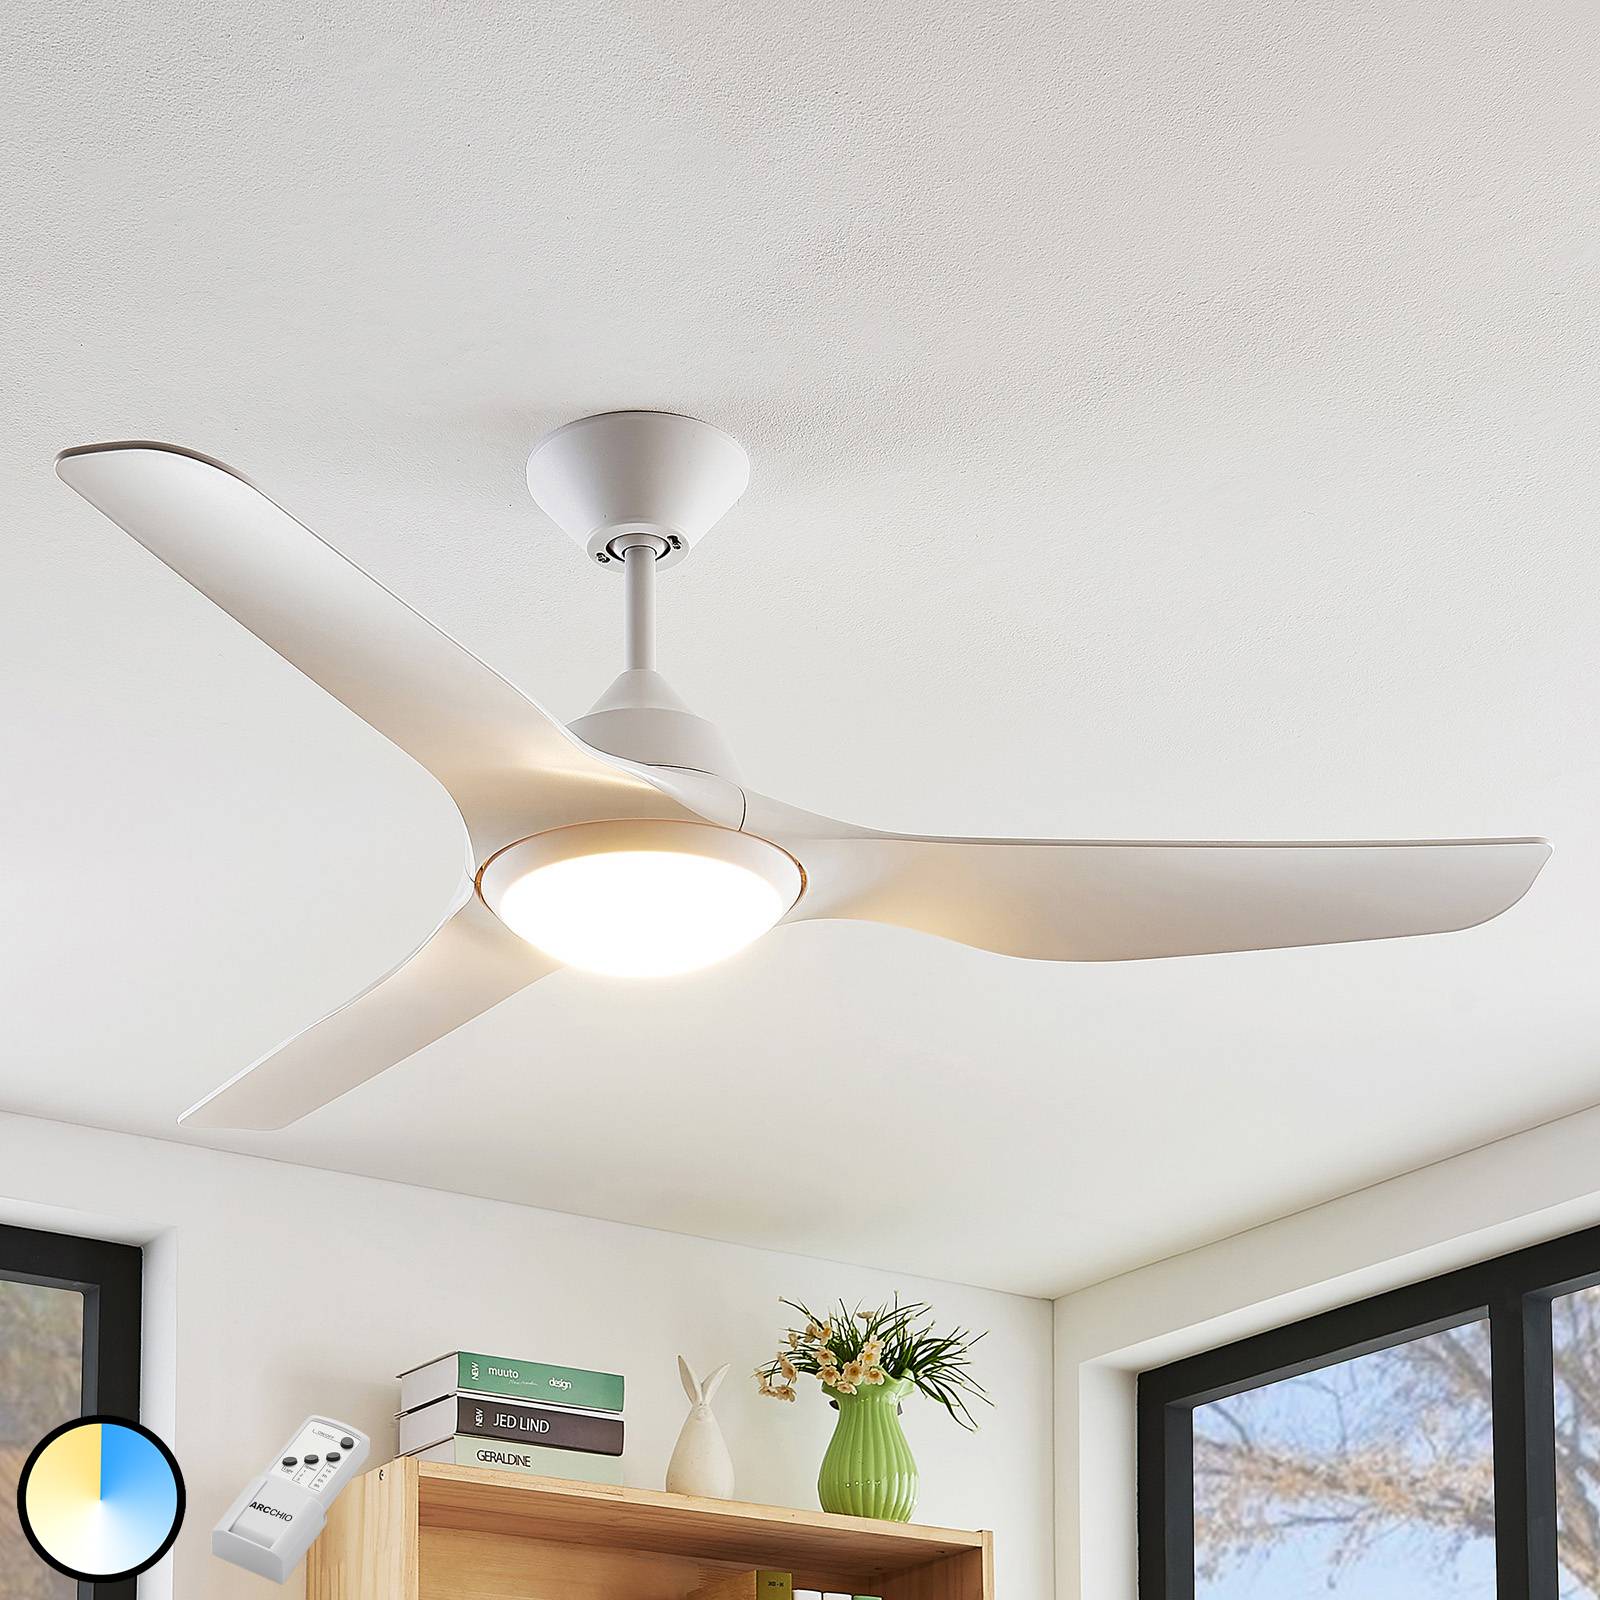 Starluna Pira LED ceiling fan, 3 blades, white